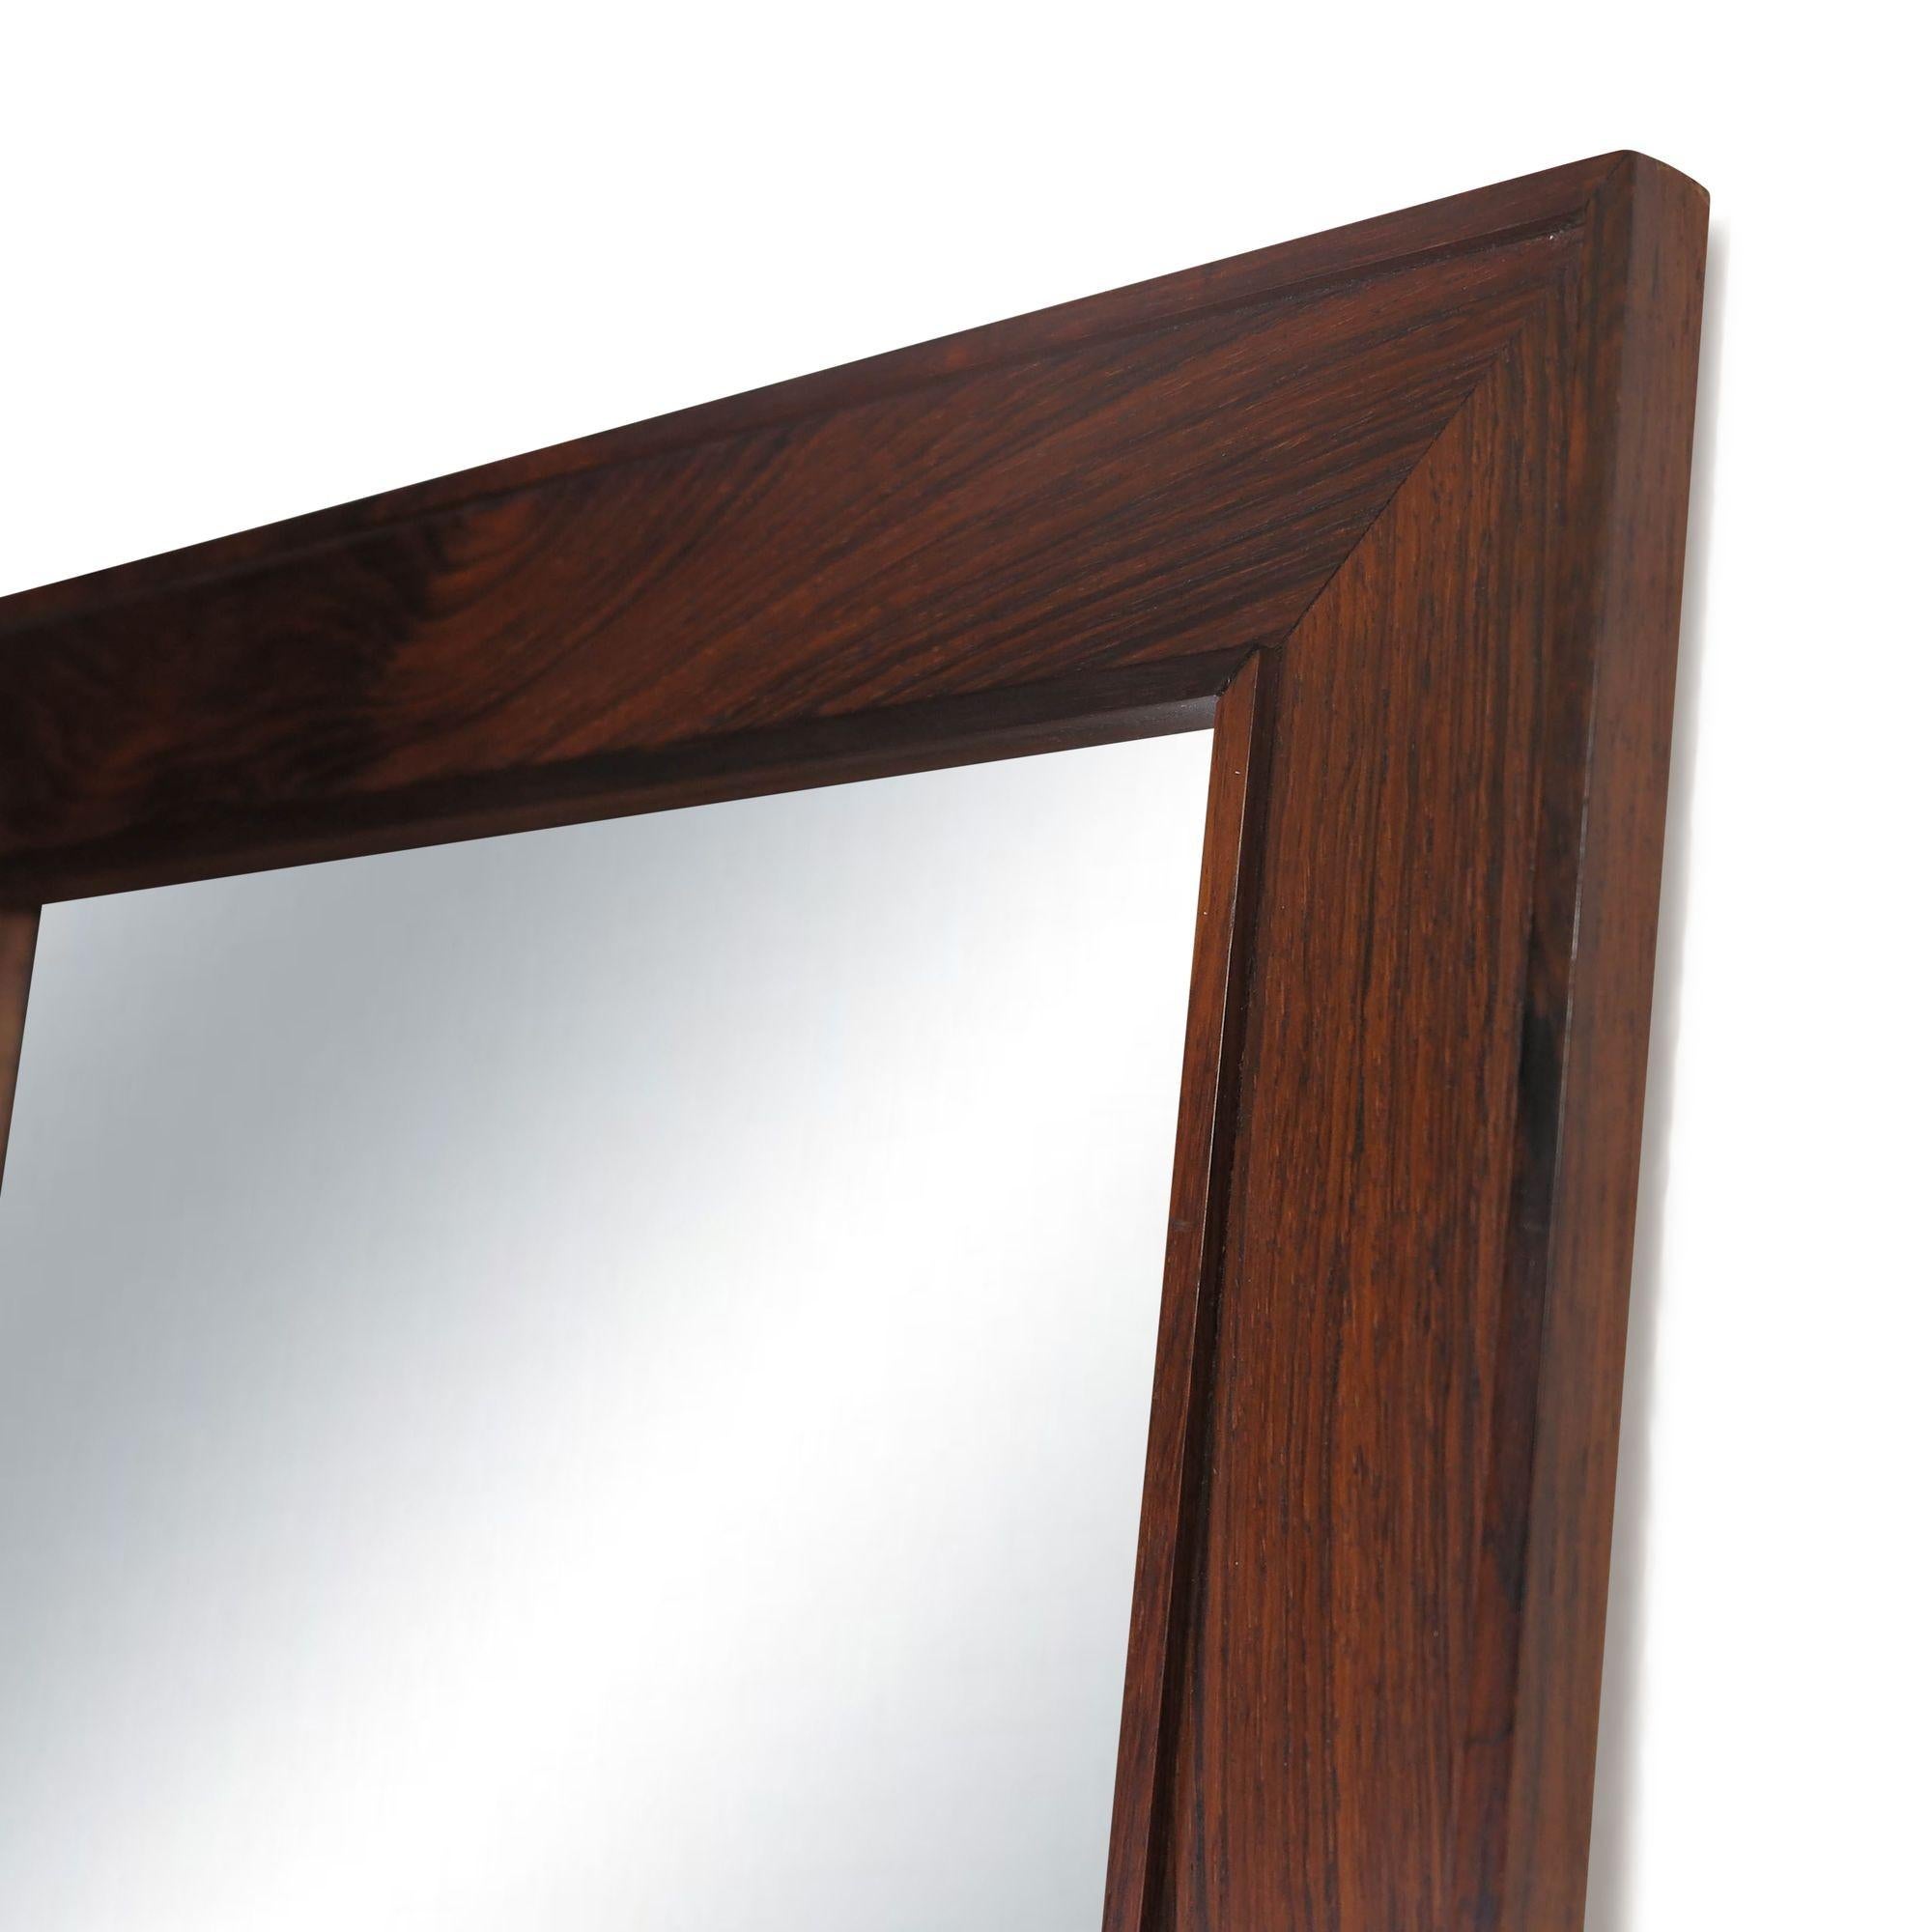 Oiled Mid-century Jansen Spejle Danish Rosewood Mirror For Sale